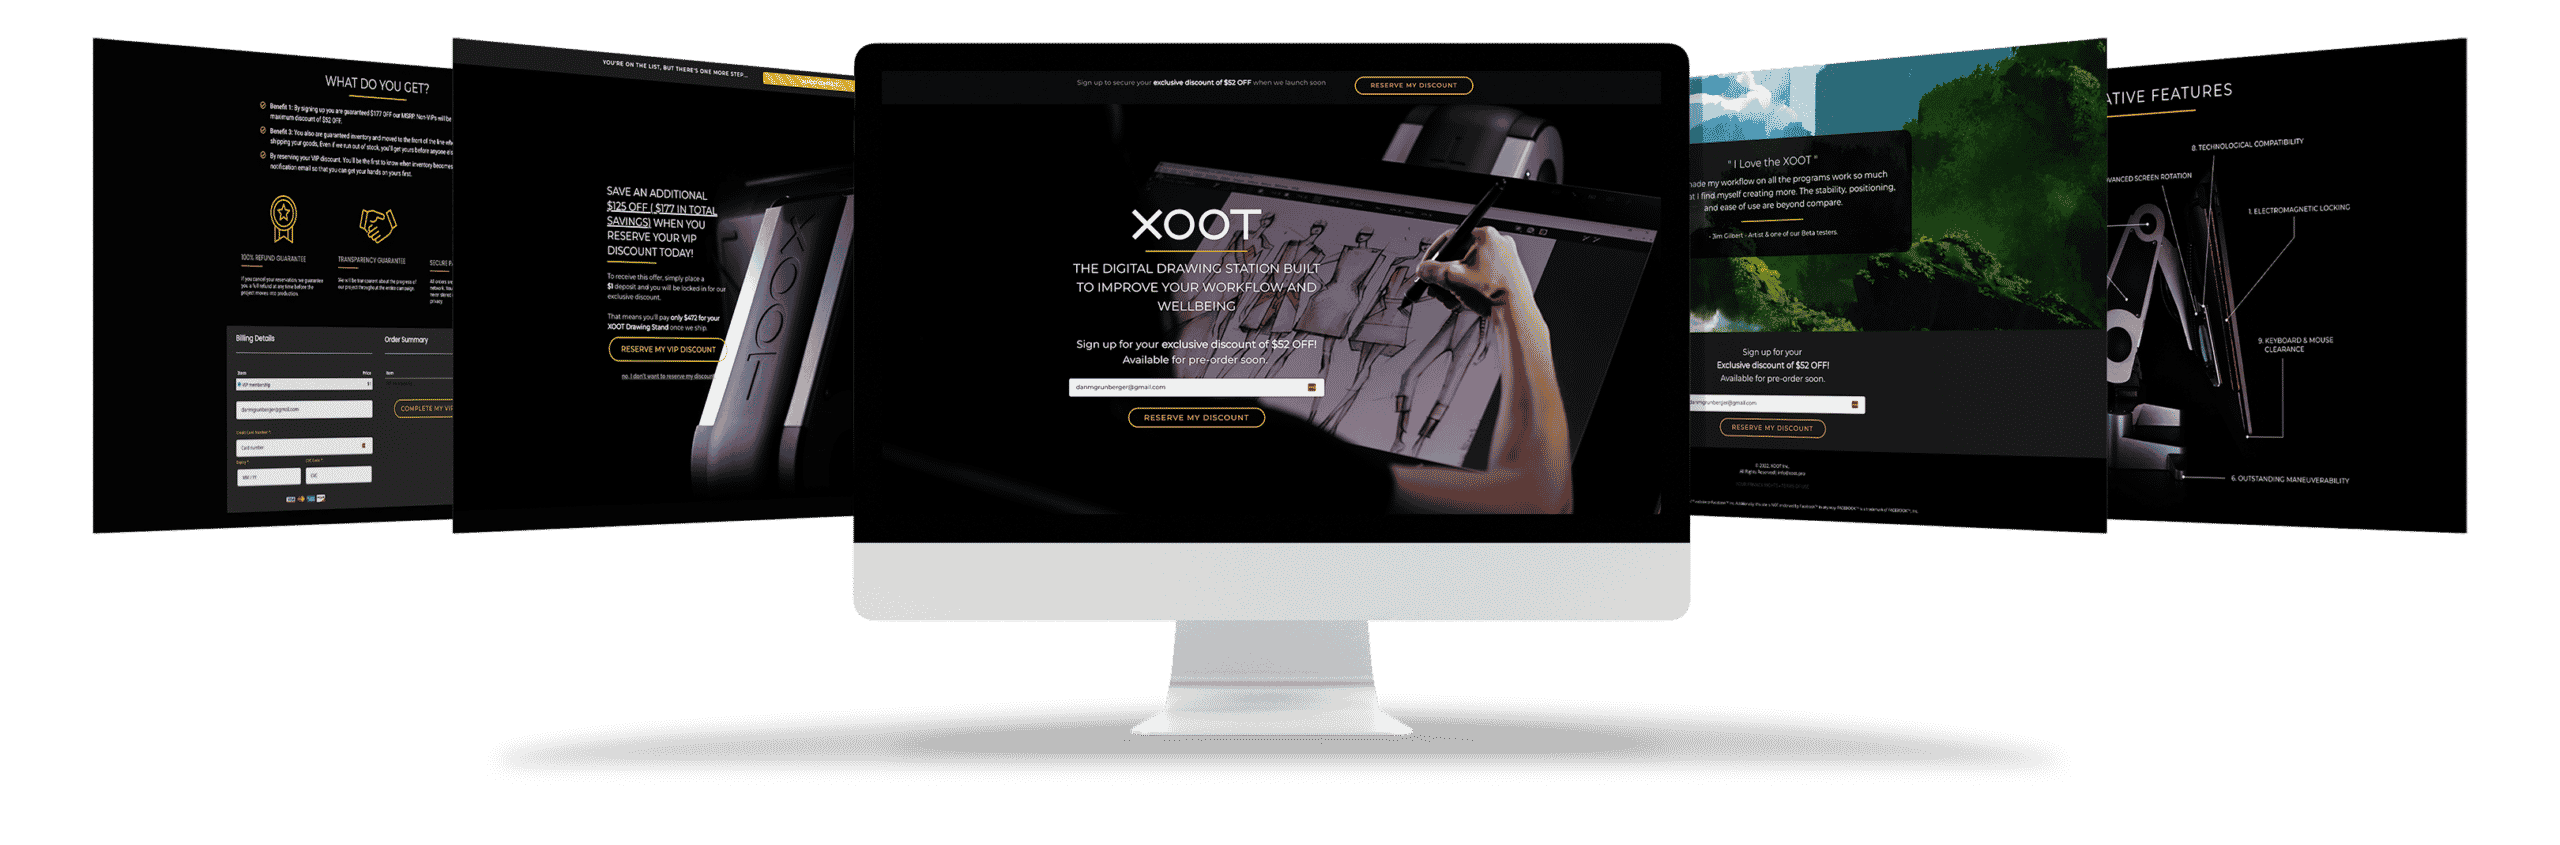 XOOT Pro landing page design mockup